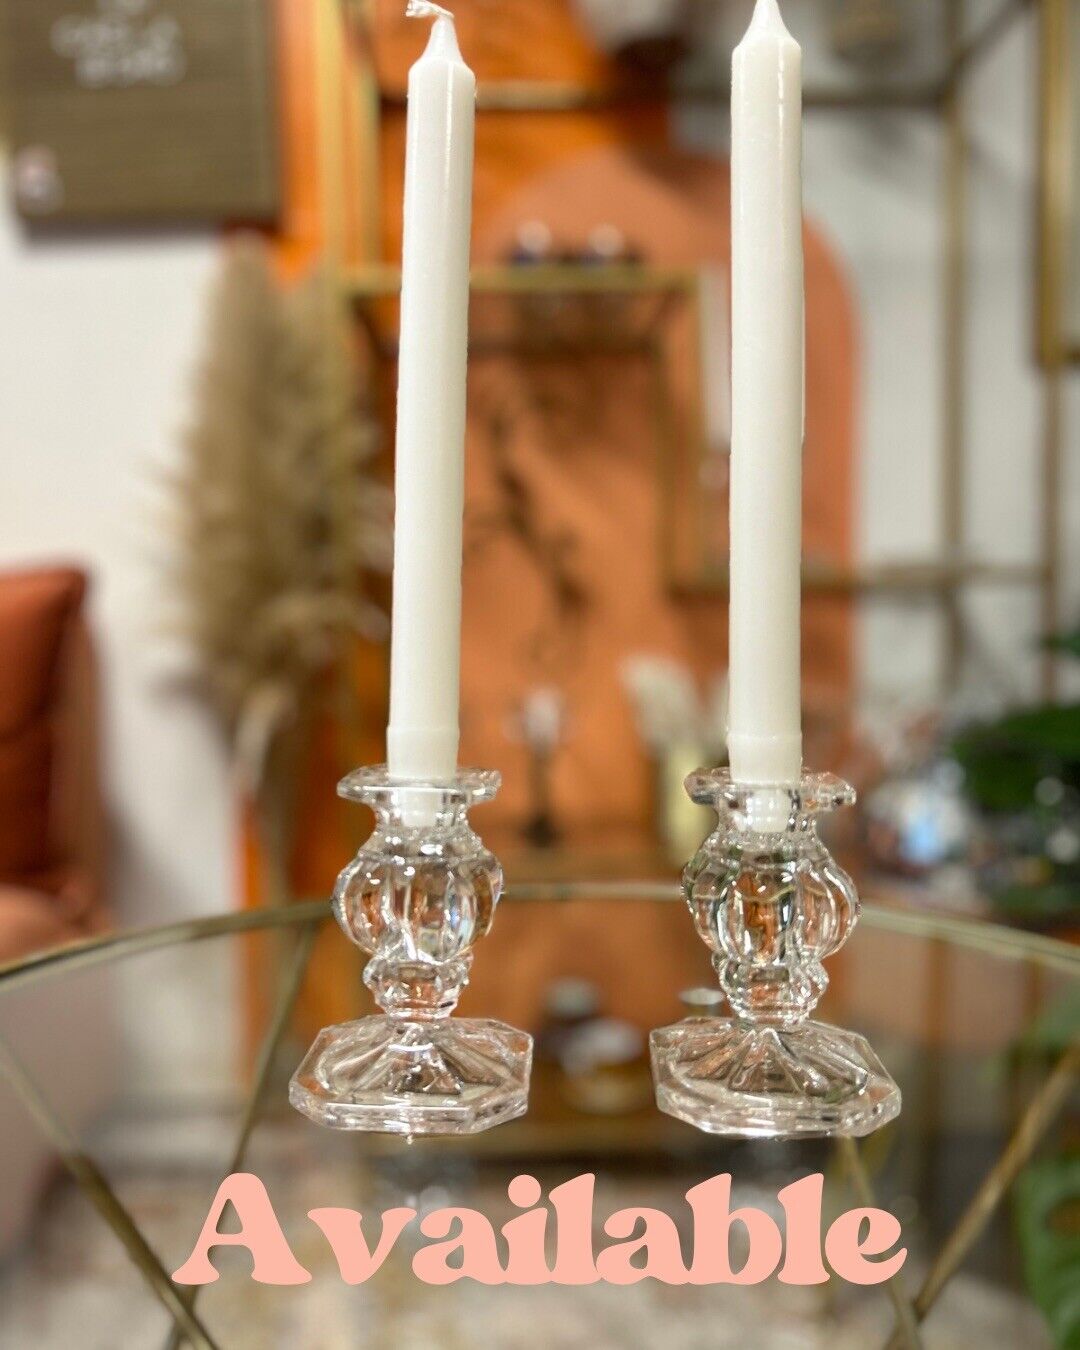 Set of 2 Gorham Crystal Baroque candlestick holders